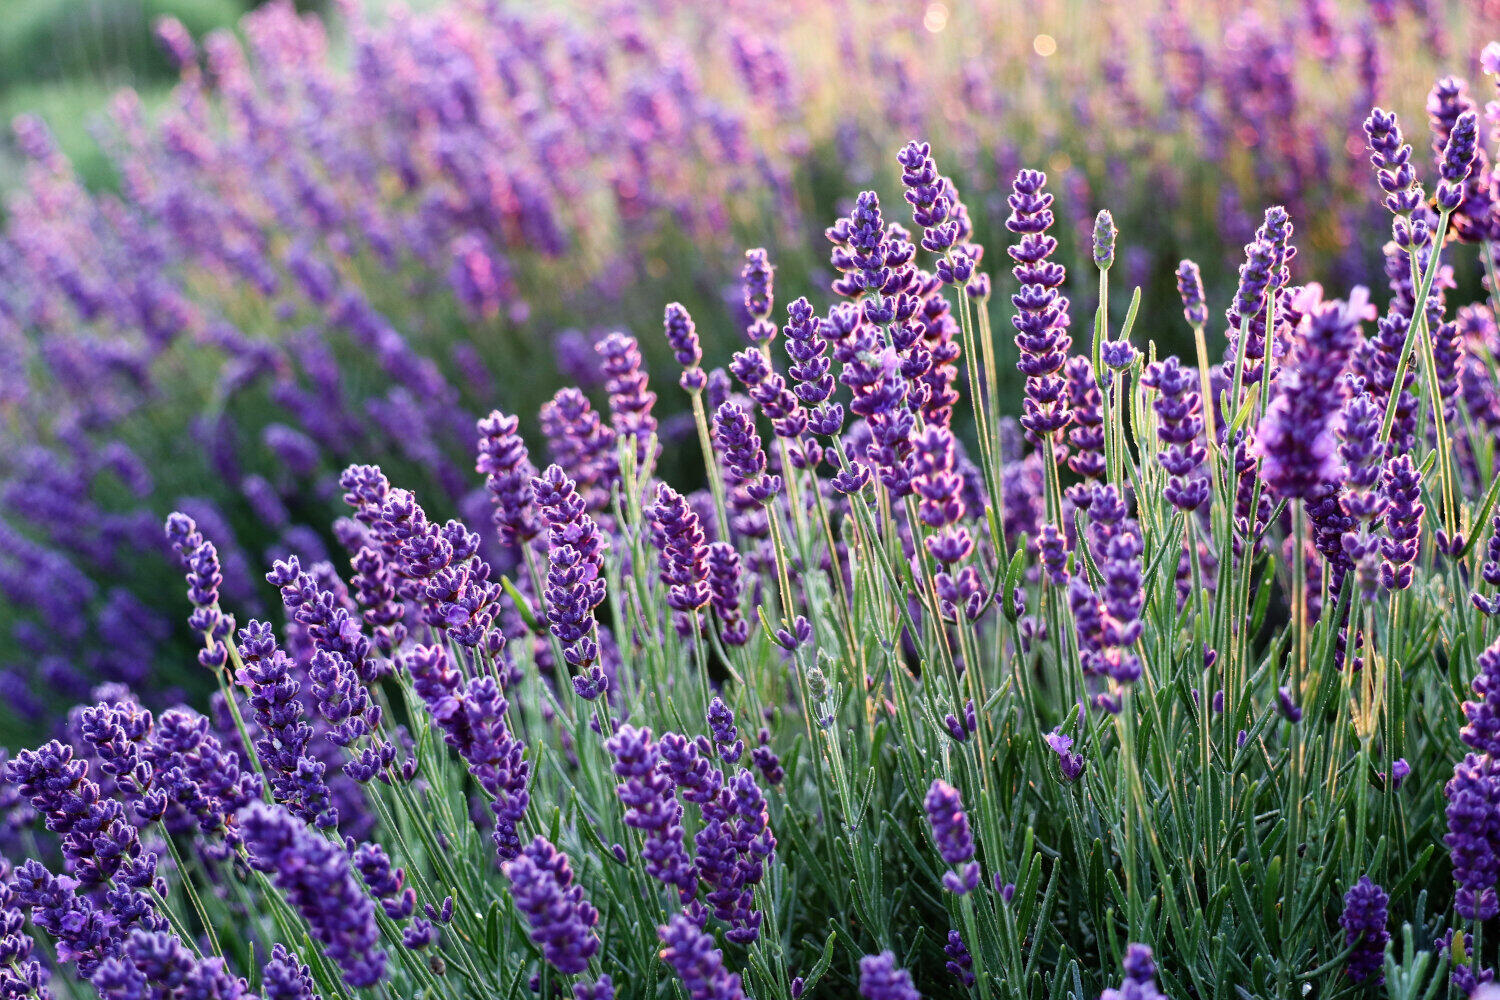 Lavender Pure Essential Oil 10ml